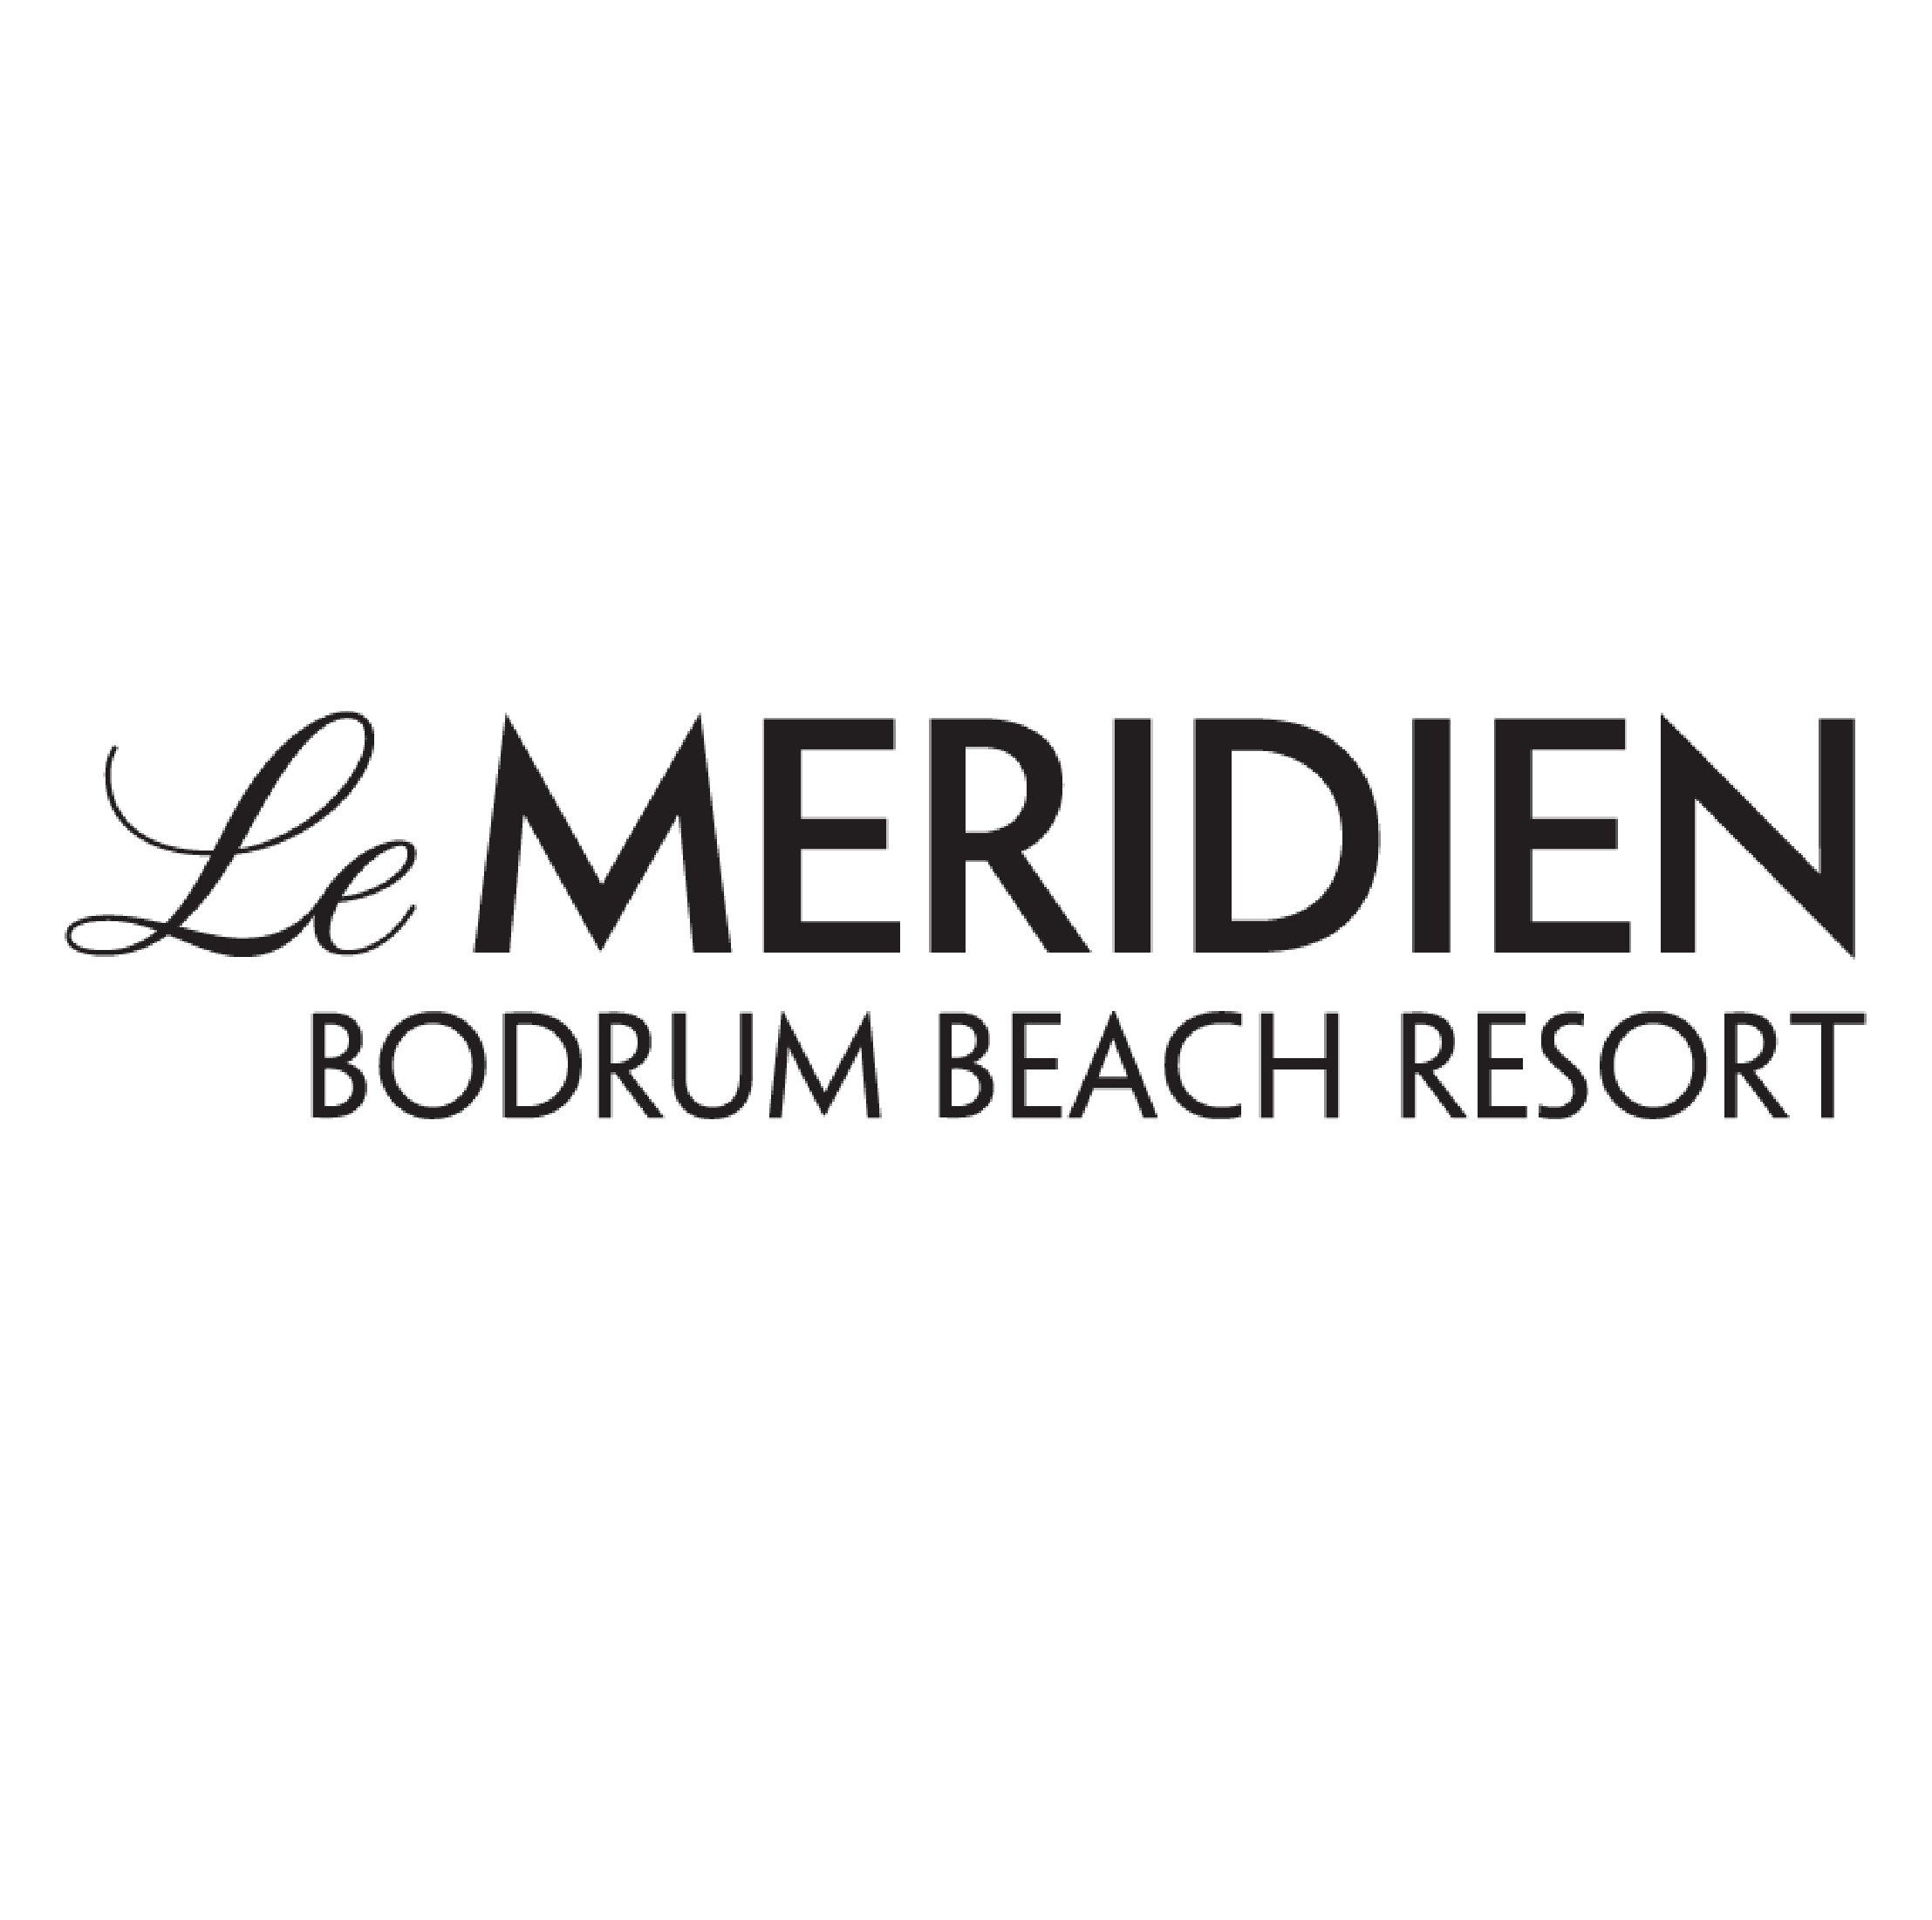 Self Photos / Files - Le Meridien Phuket Beach Resort